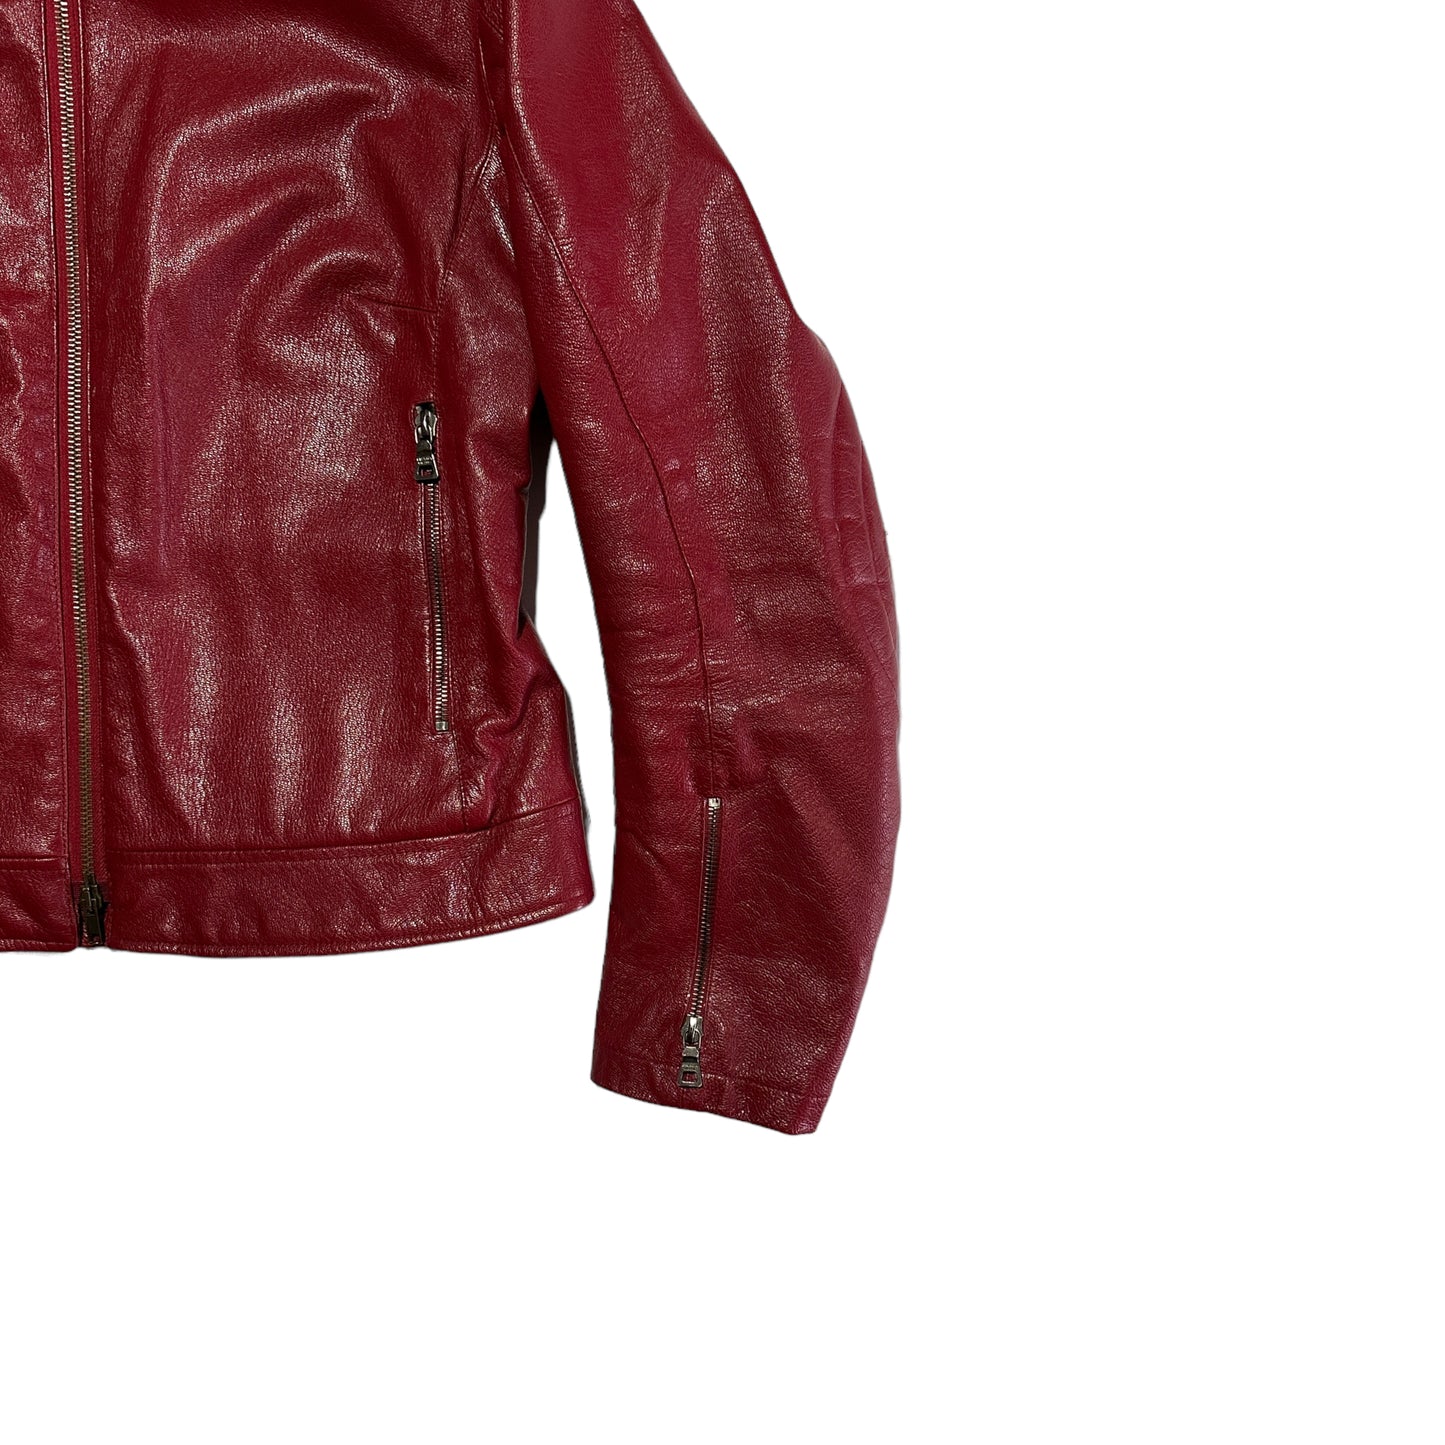 S/S 2000 Prada Leather Jacket
(46)